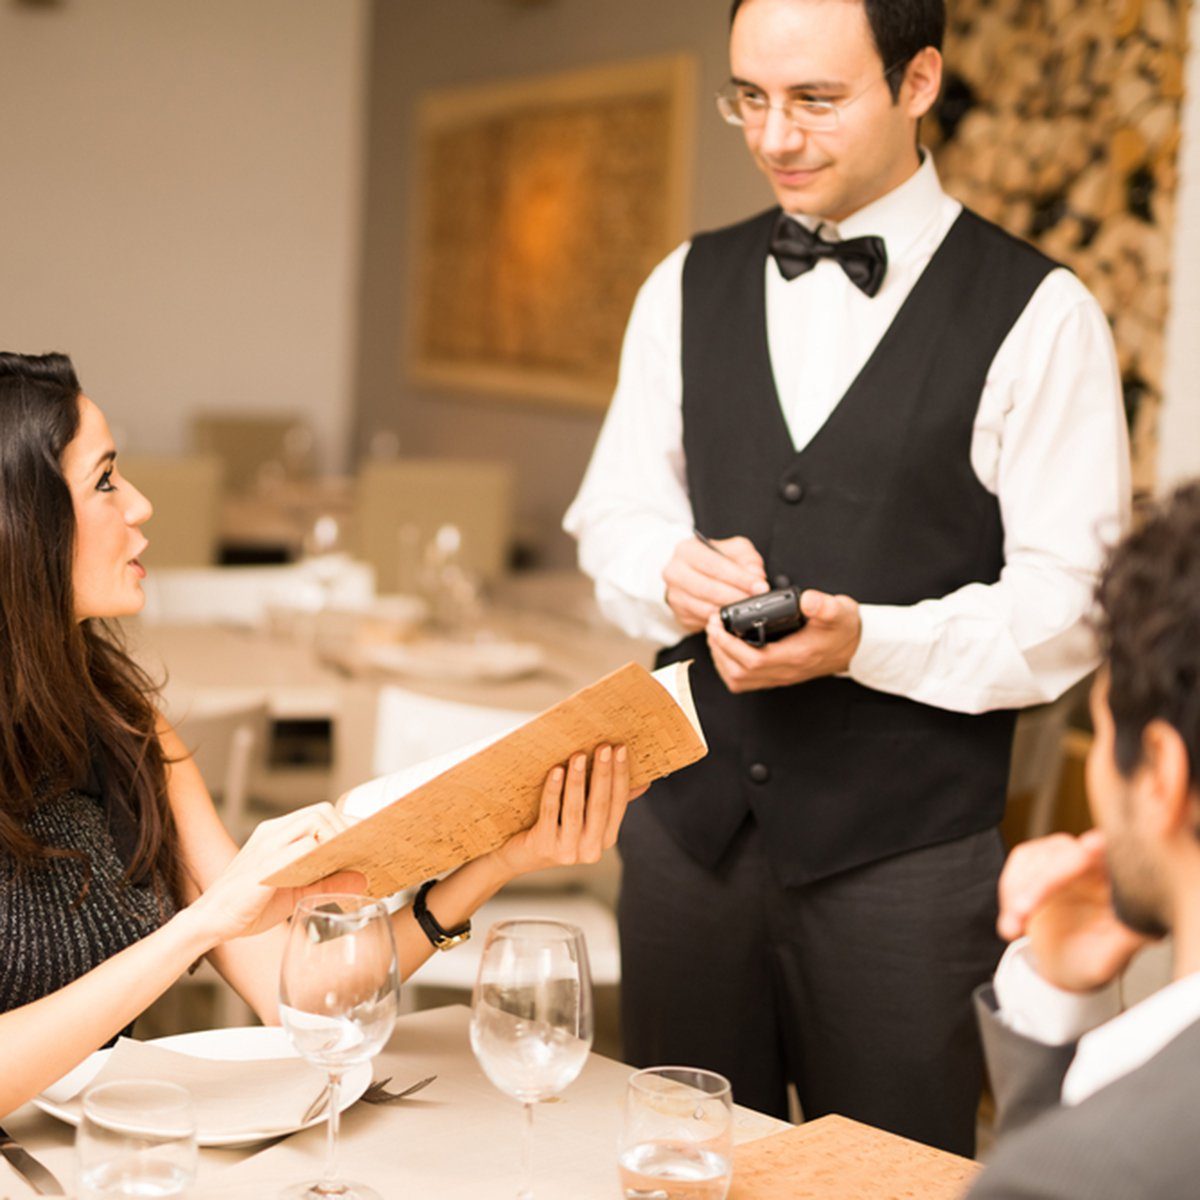 Couple ordering dinner in a luxury restaurant